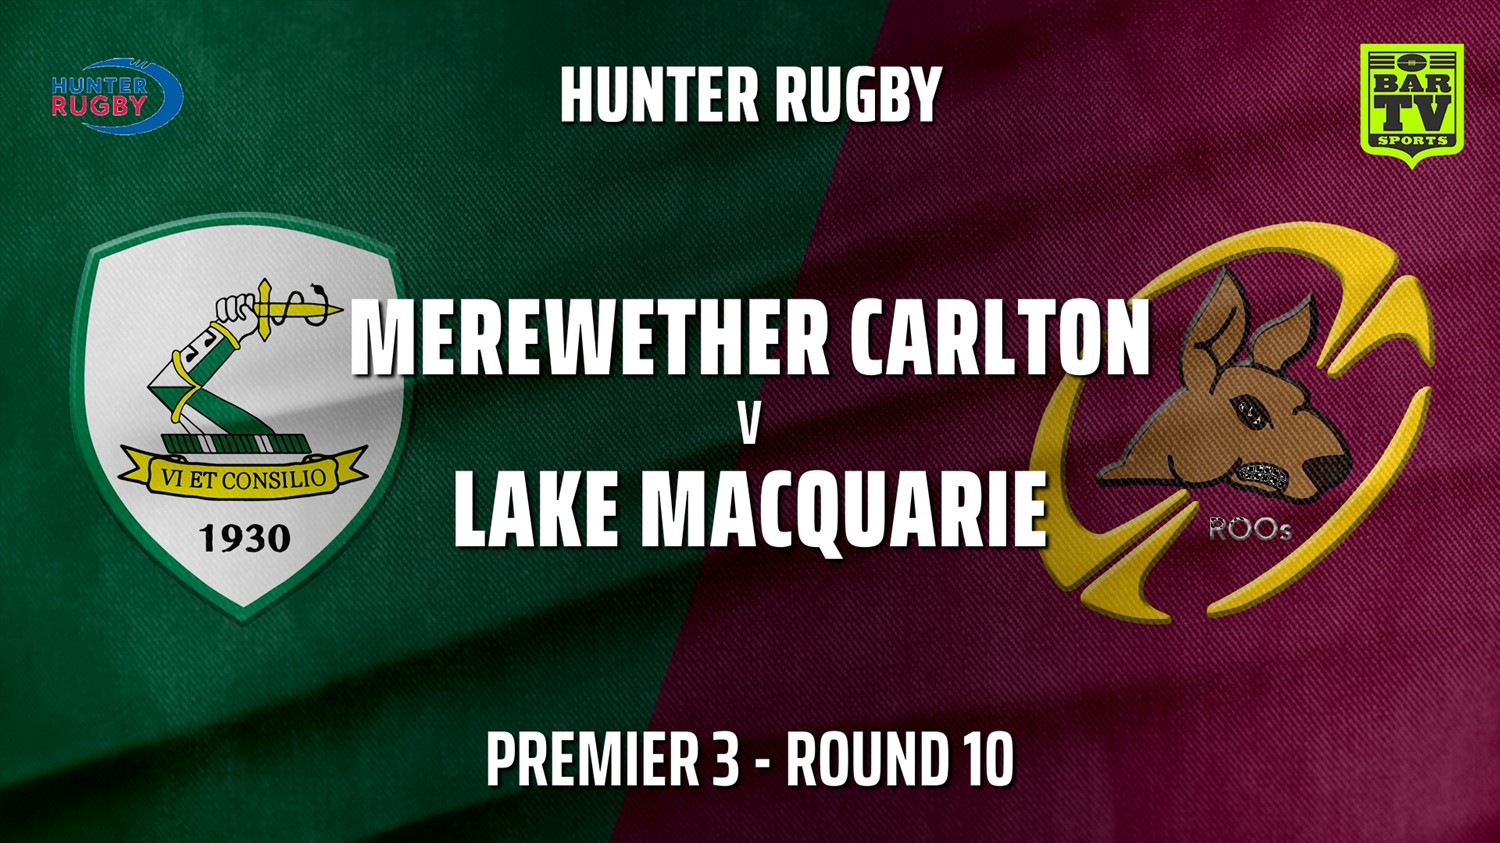 210626-Hunter Rugby Round 10 - Premier 3 - Merewether Carlton v Lake Macquarie Slate Image